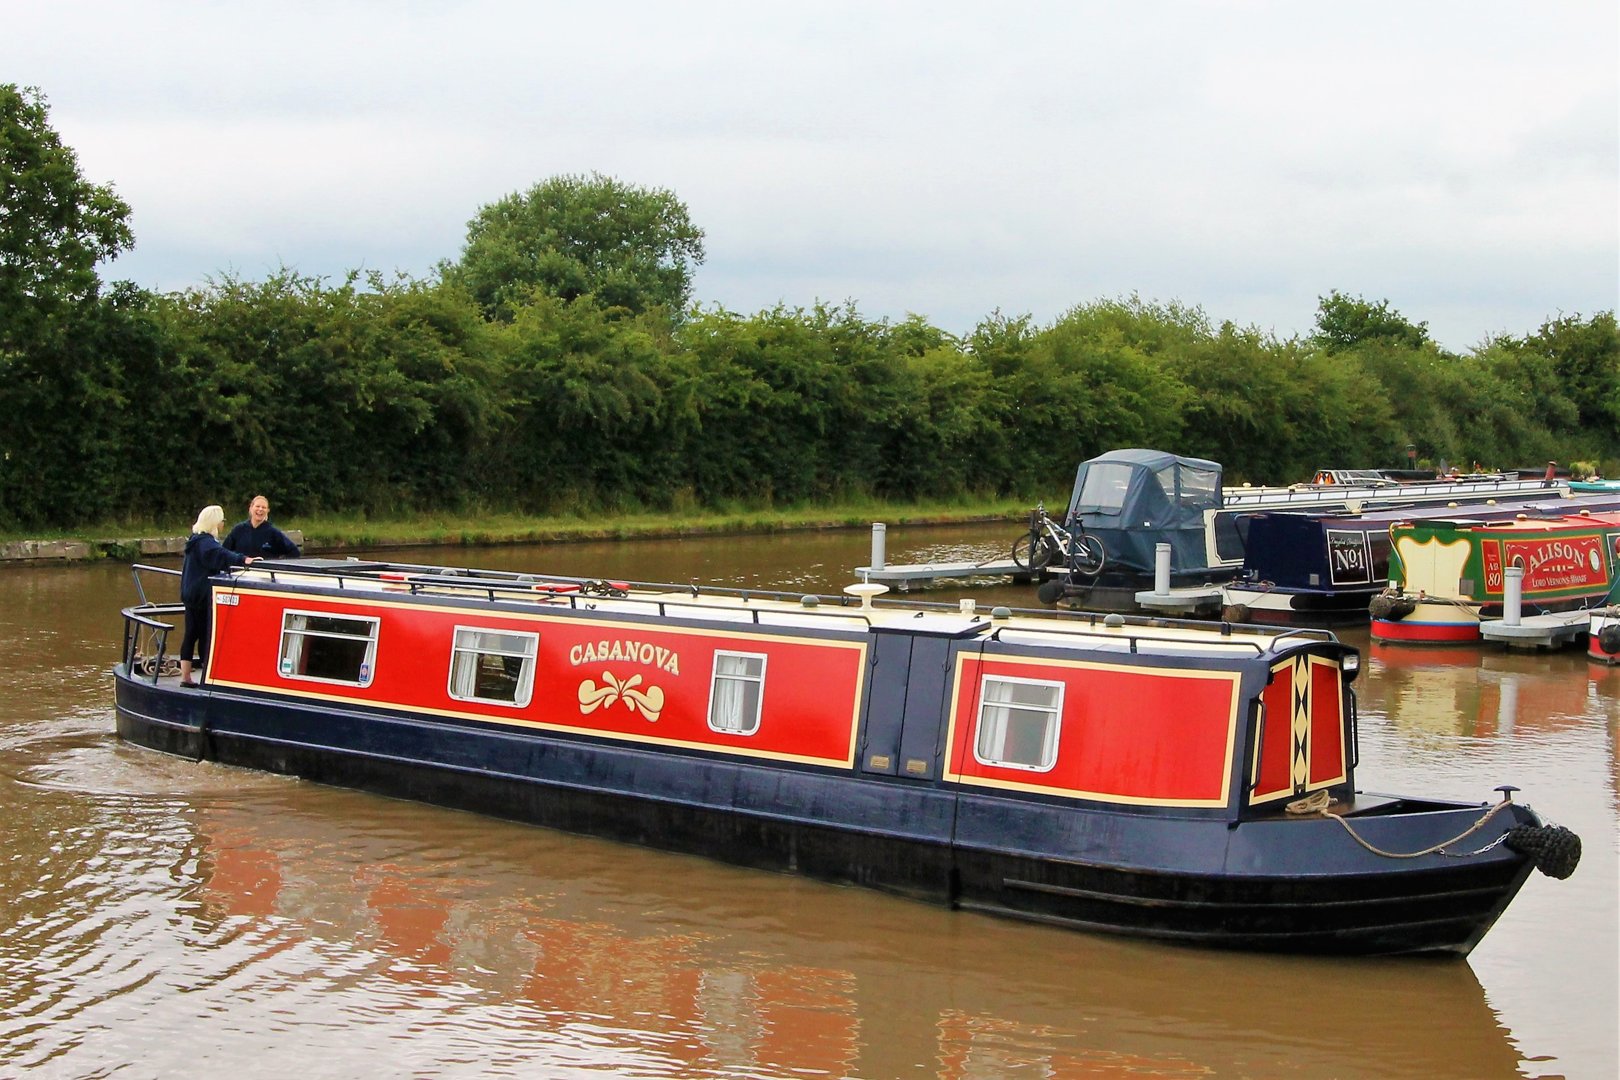 The Casanova class canal boat